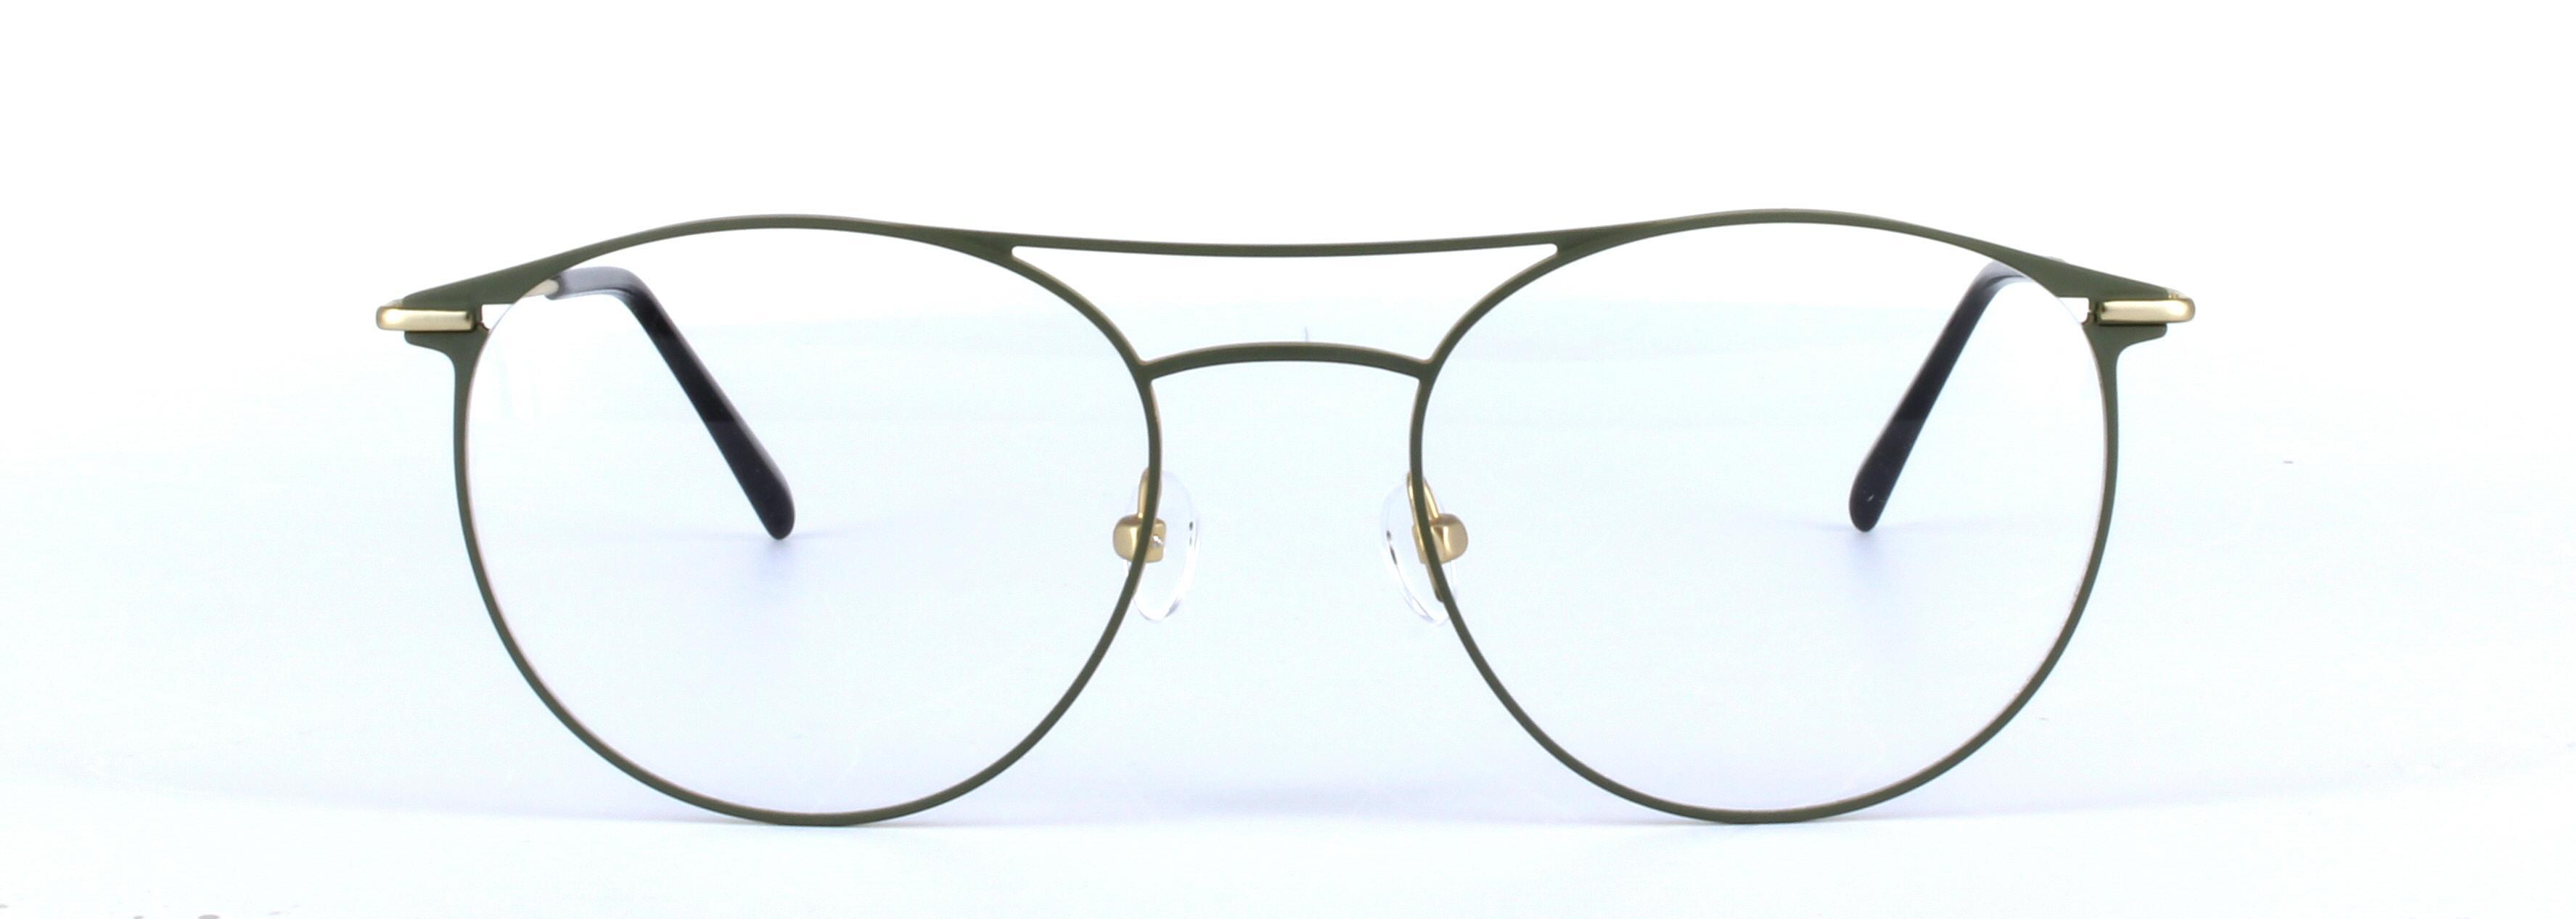 Dexter Olive Green Full Rim Round Metal Glasses - Image View 5